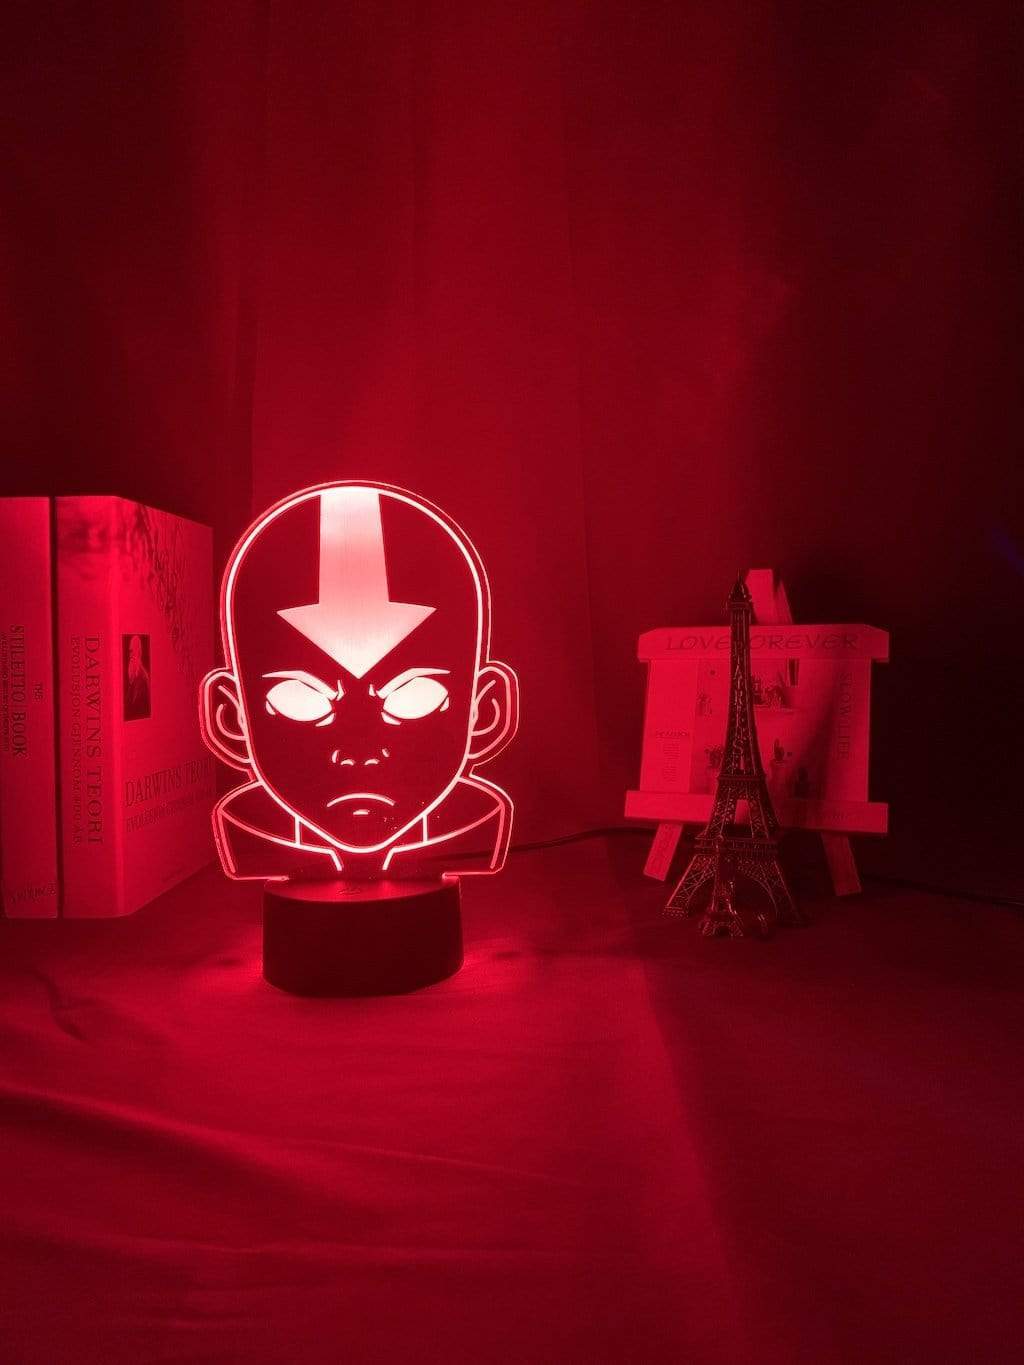 Lampe Avatar The Last Airbender Nightlight for Kids The Legend of Aang Appa Figure Table Night Light